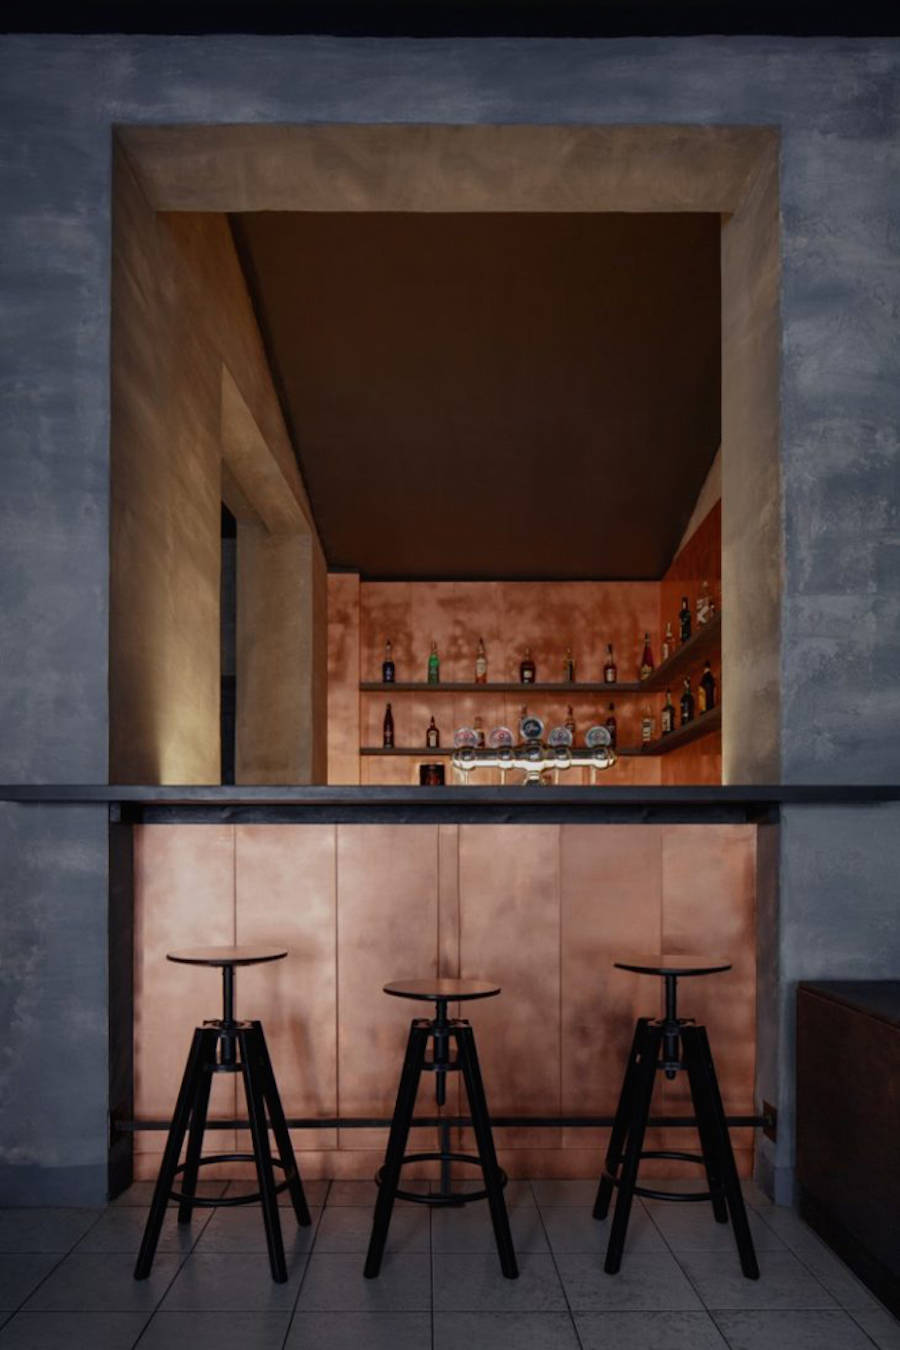 Copper Bar